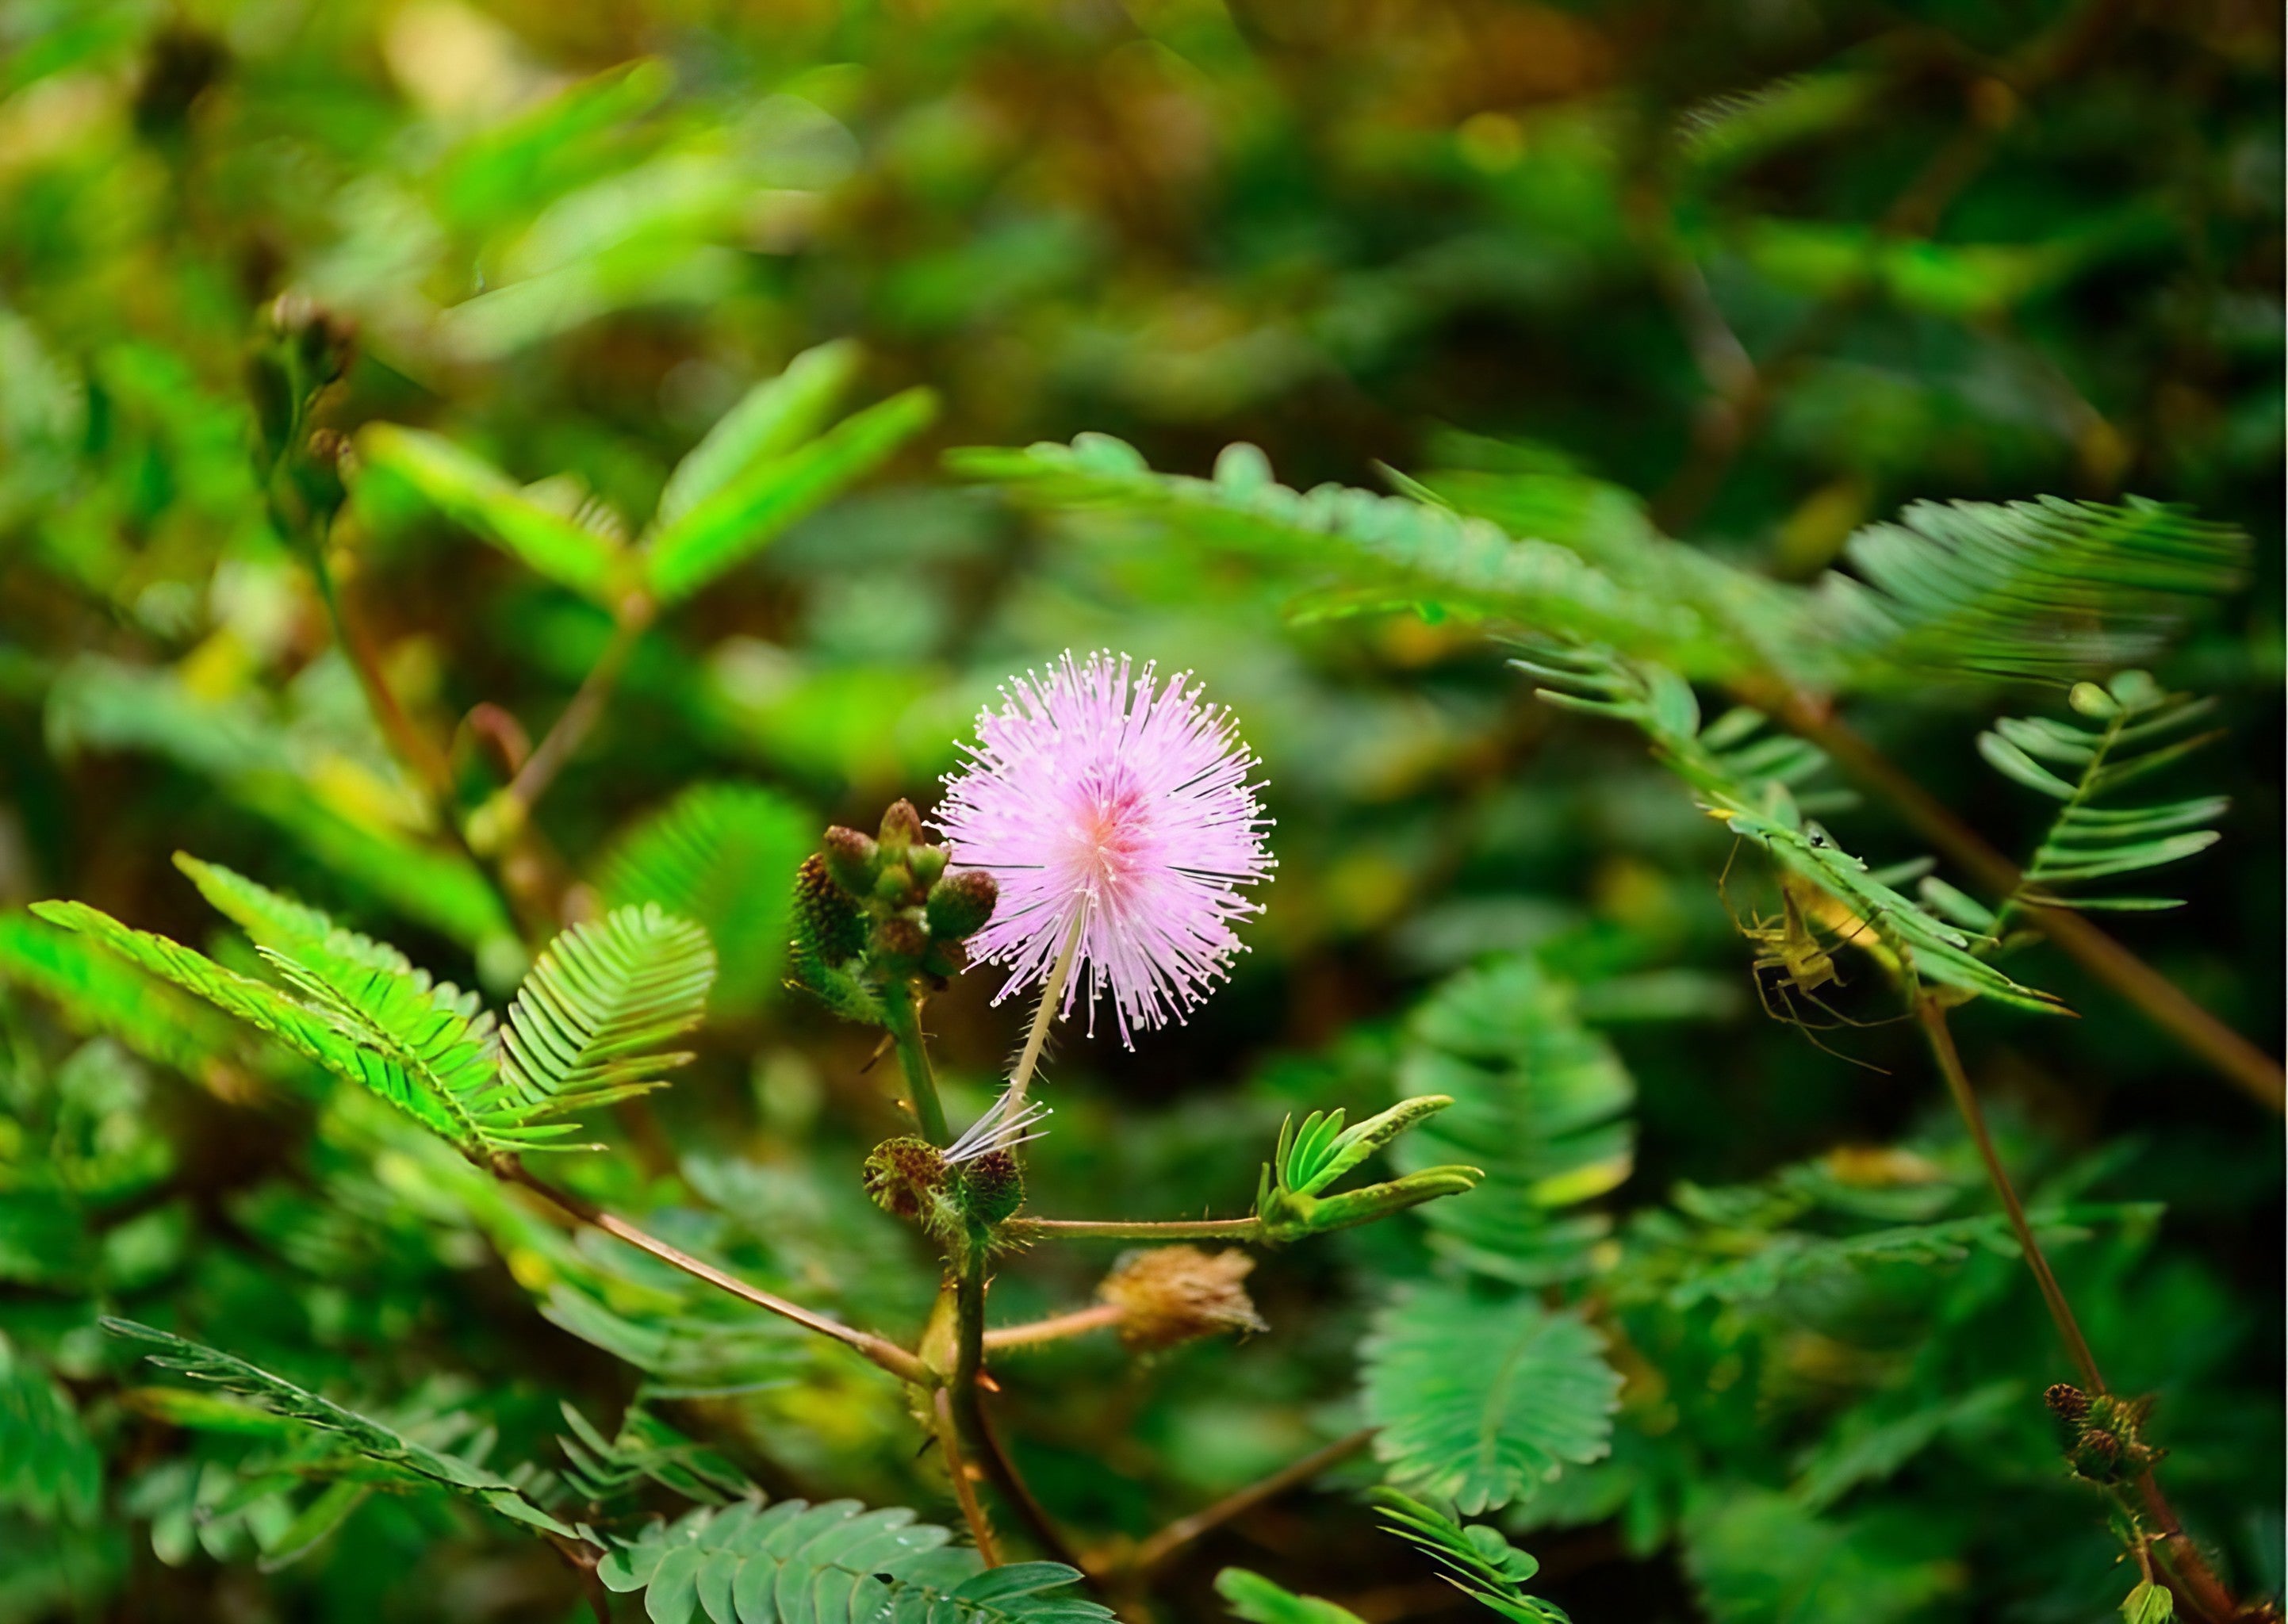 Pink Mimosa Pudica flower emerging among lush green foliage